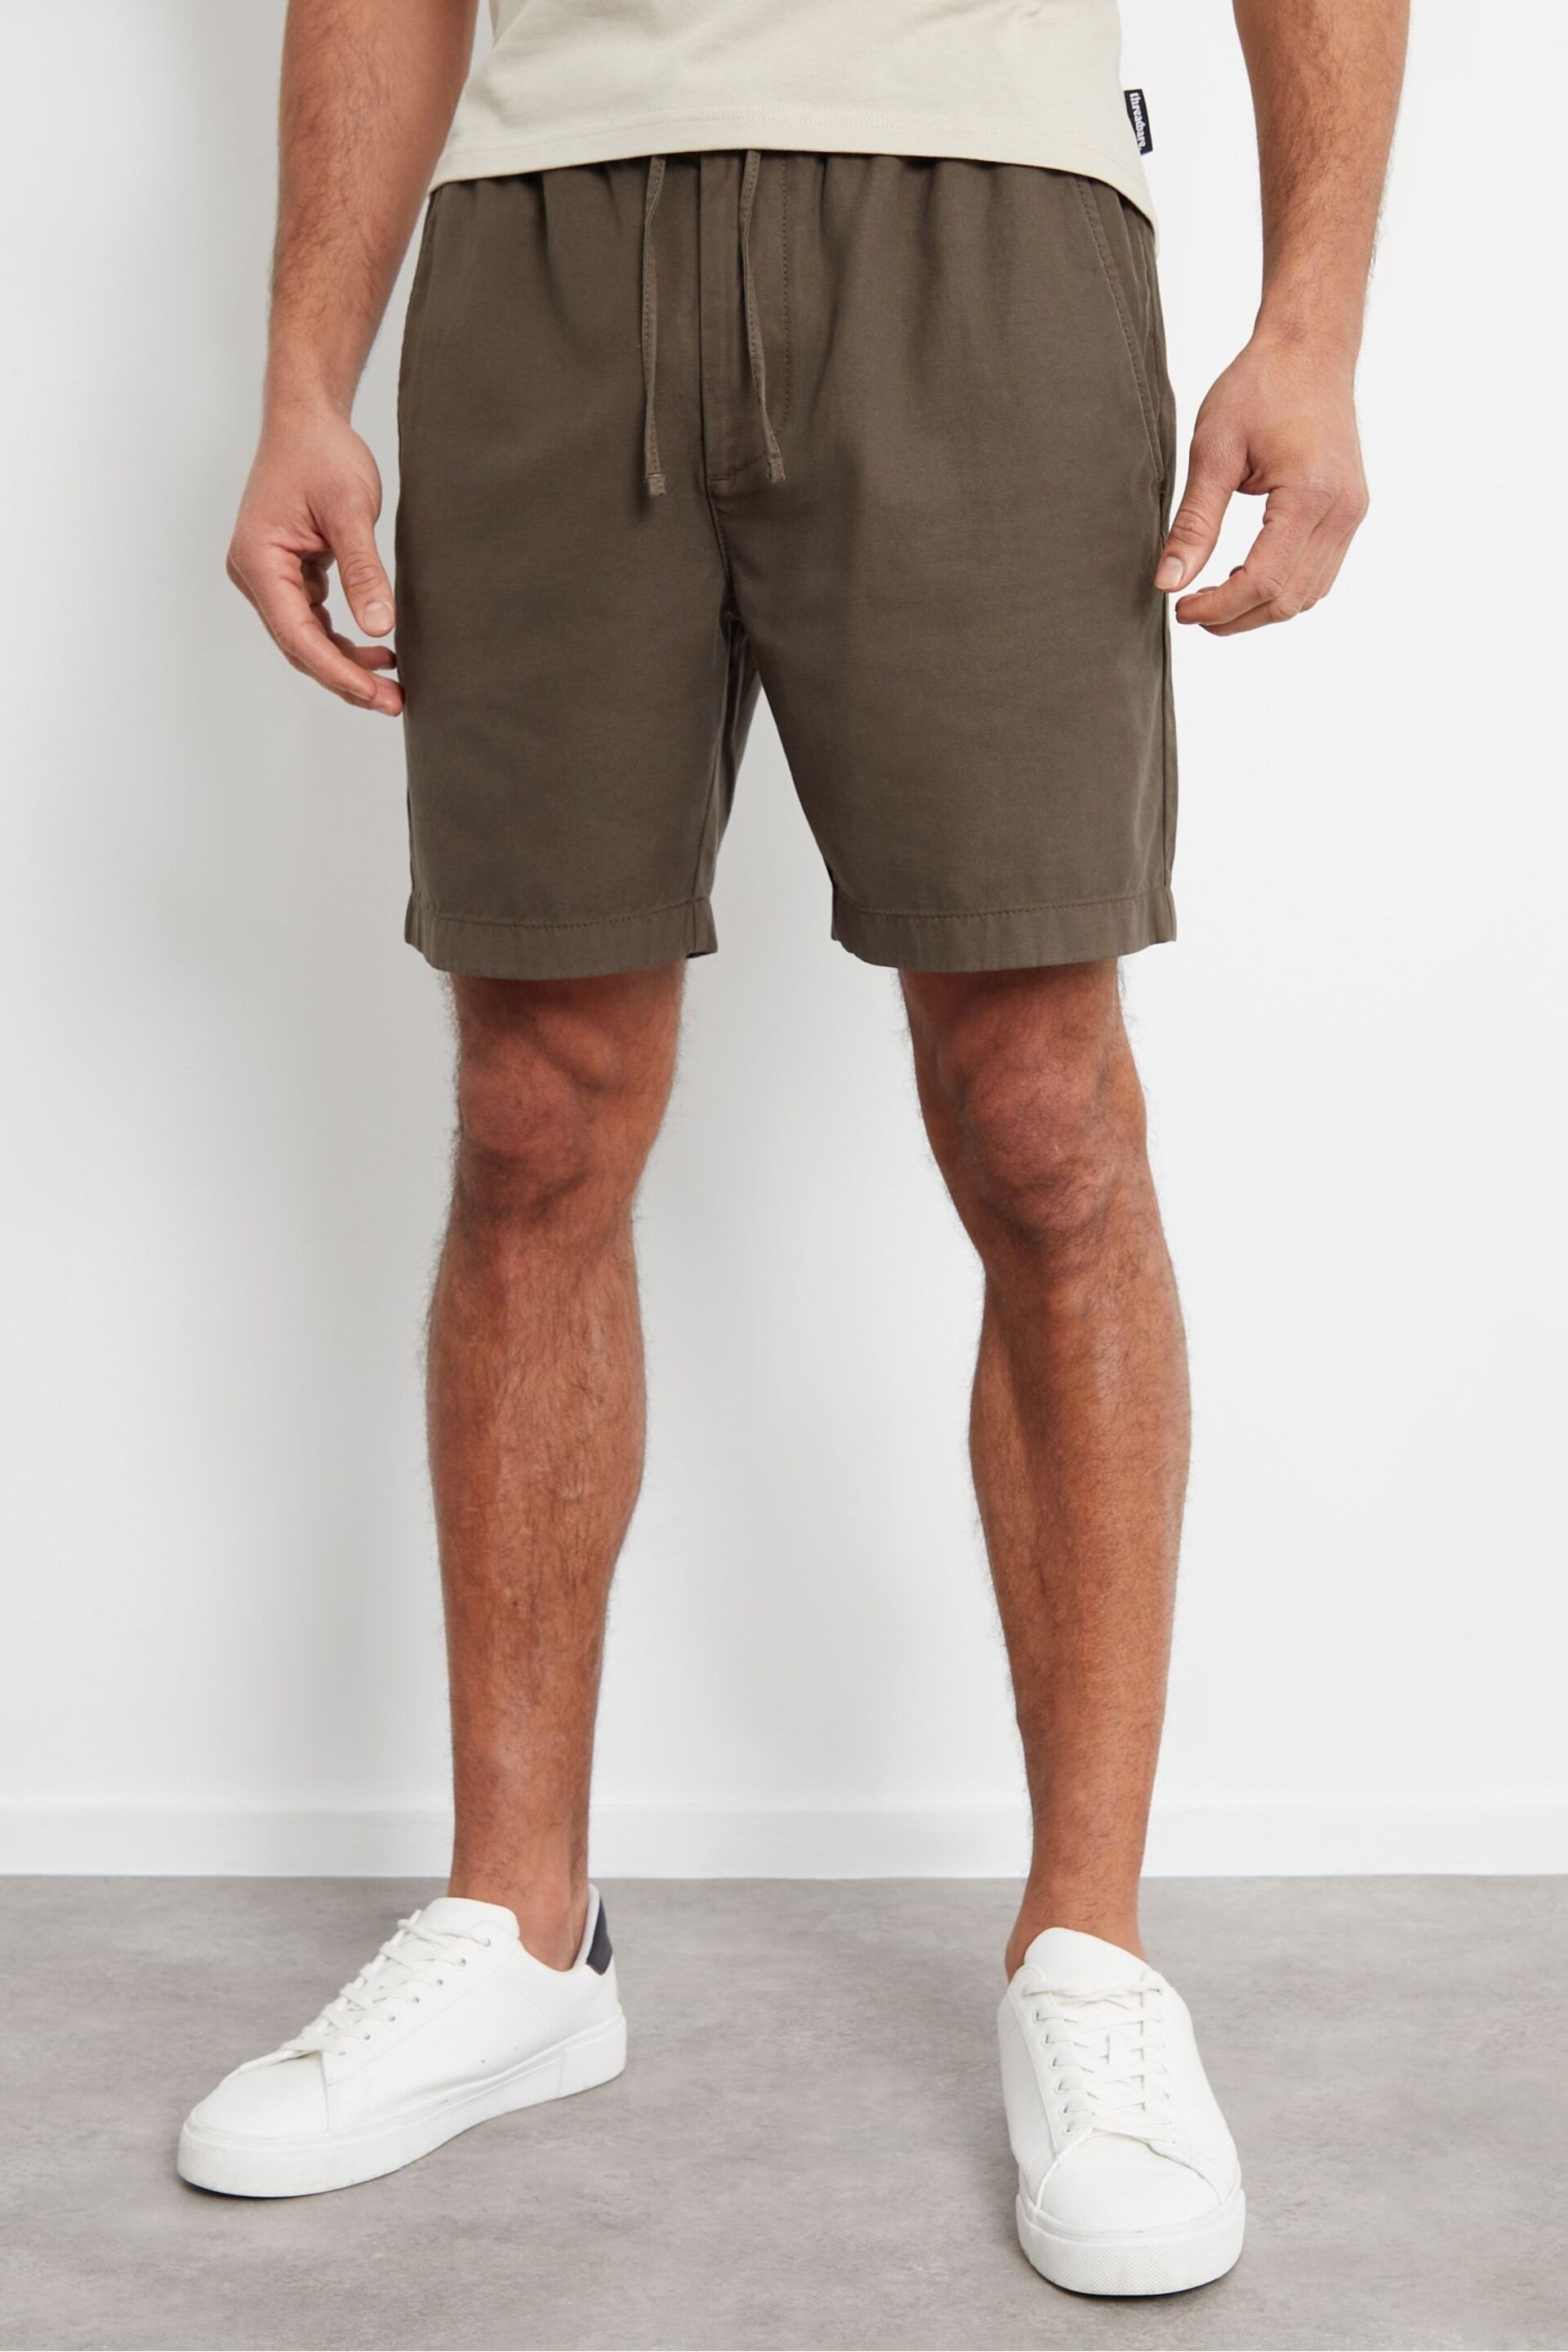 Threadbare Chocolate Cotton Lyocell Jogger Style Shorts - Image 1 of 4